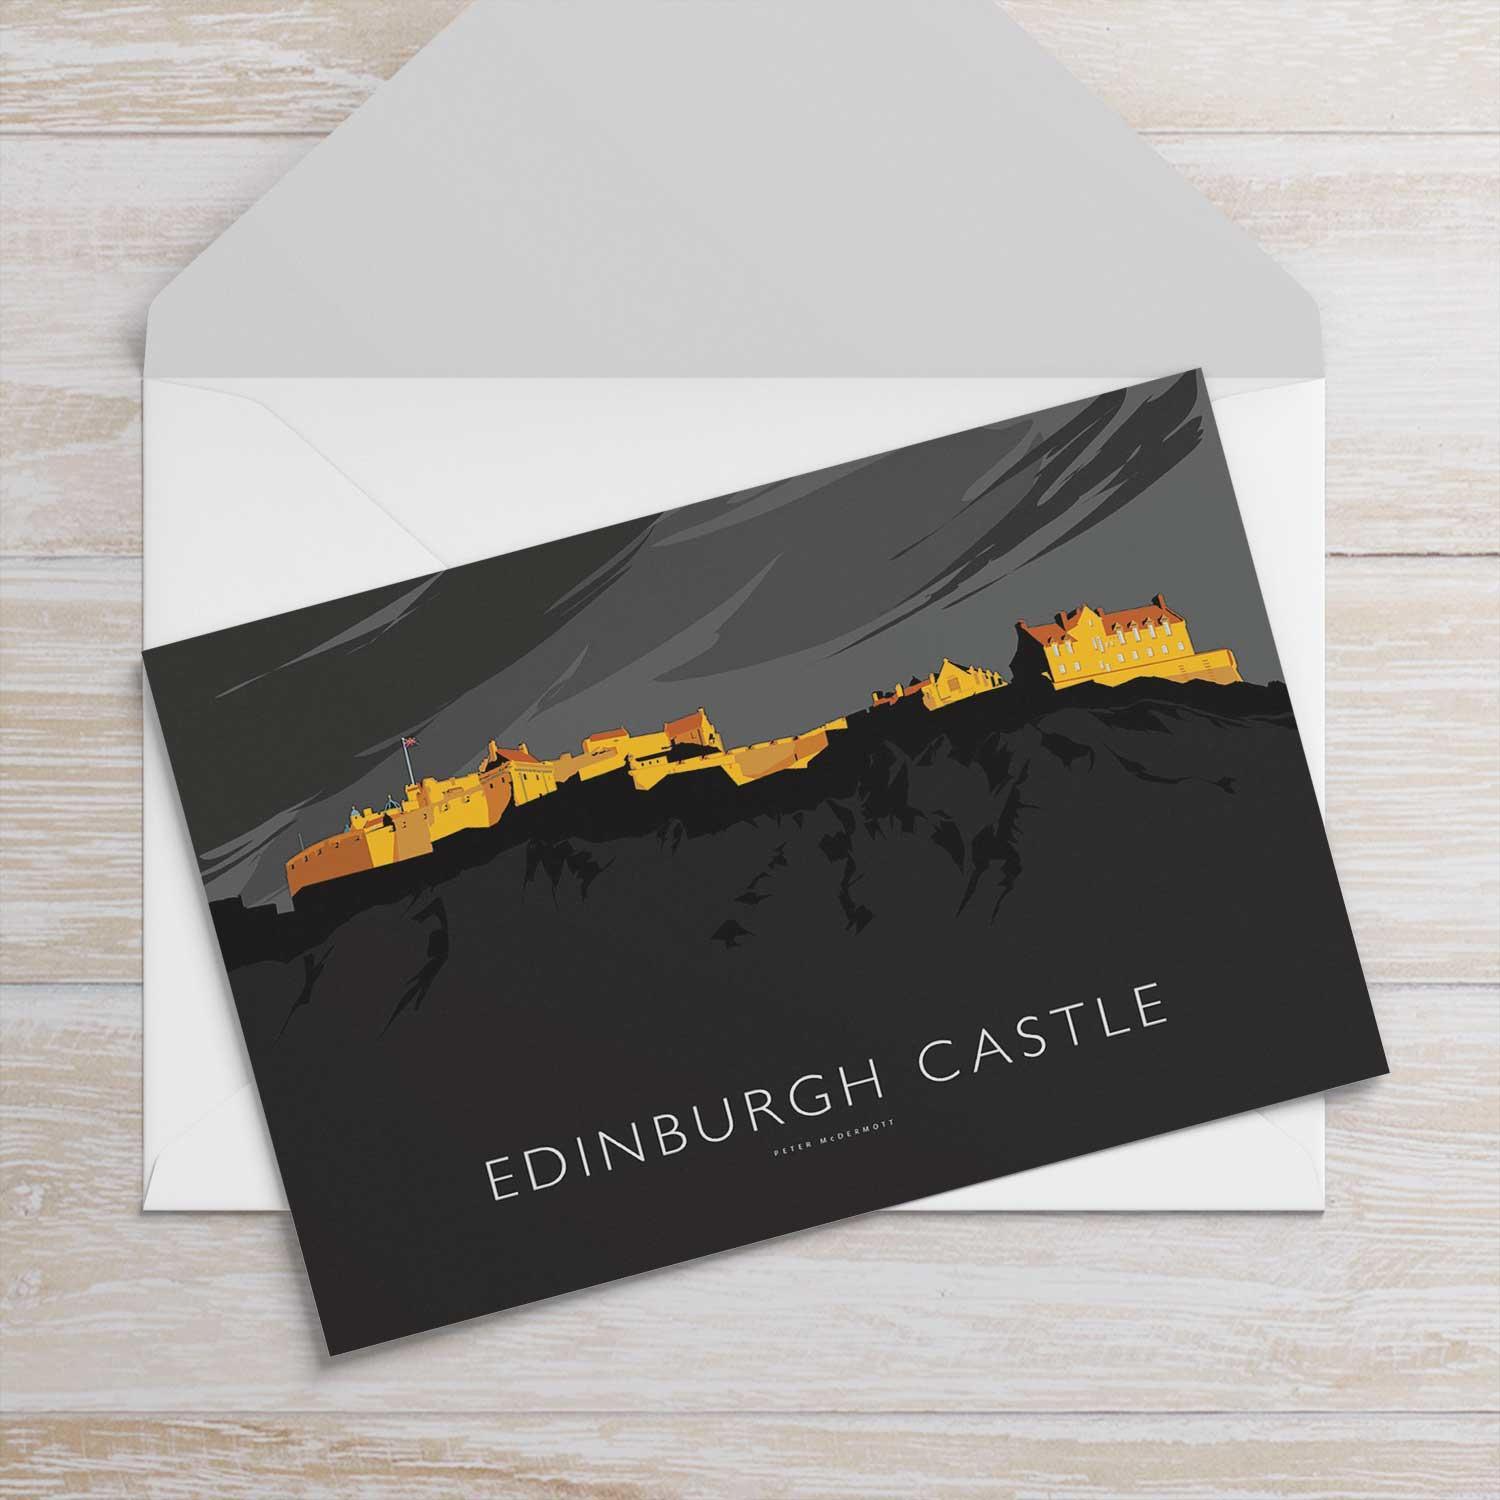 Edinburgh Castle Greeting Card from an original painting by artist Peter McDermott